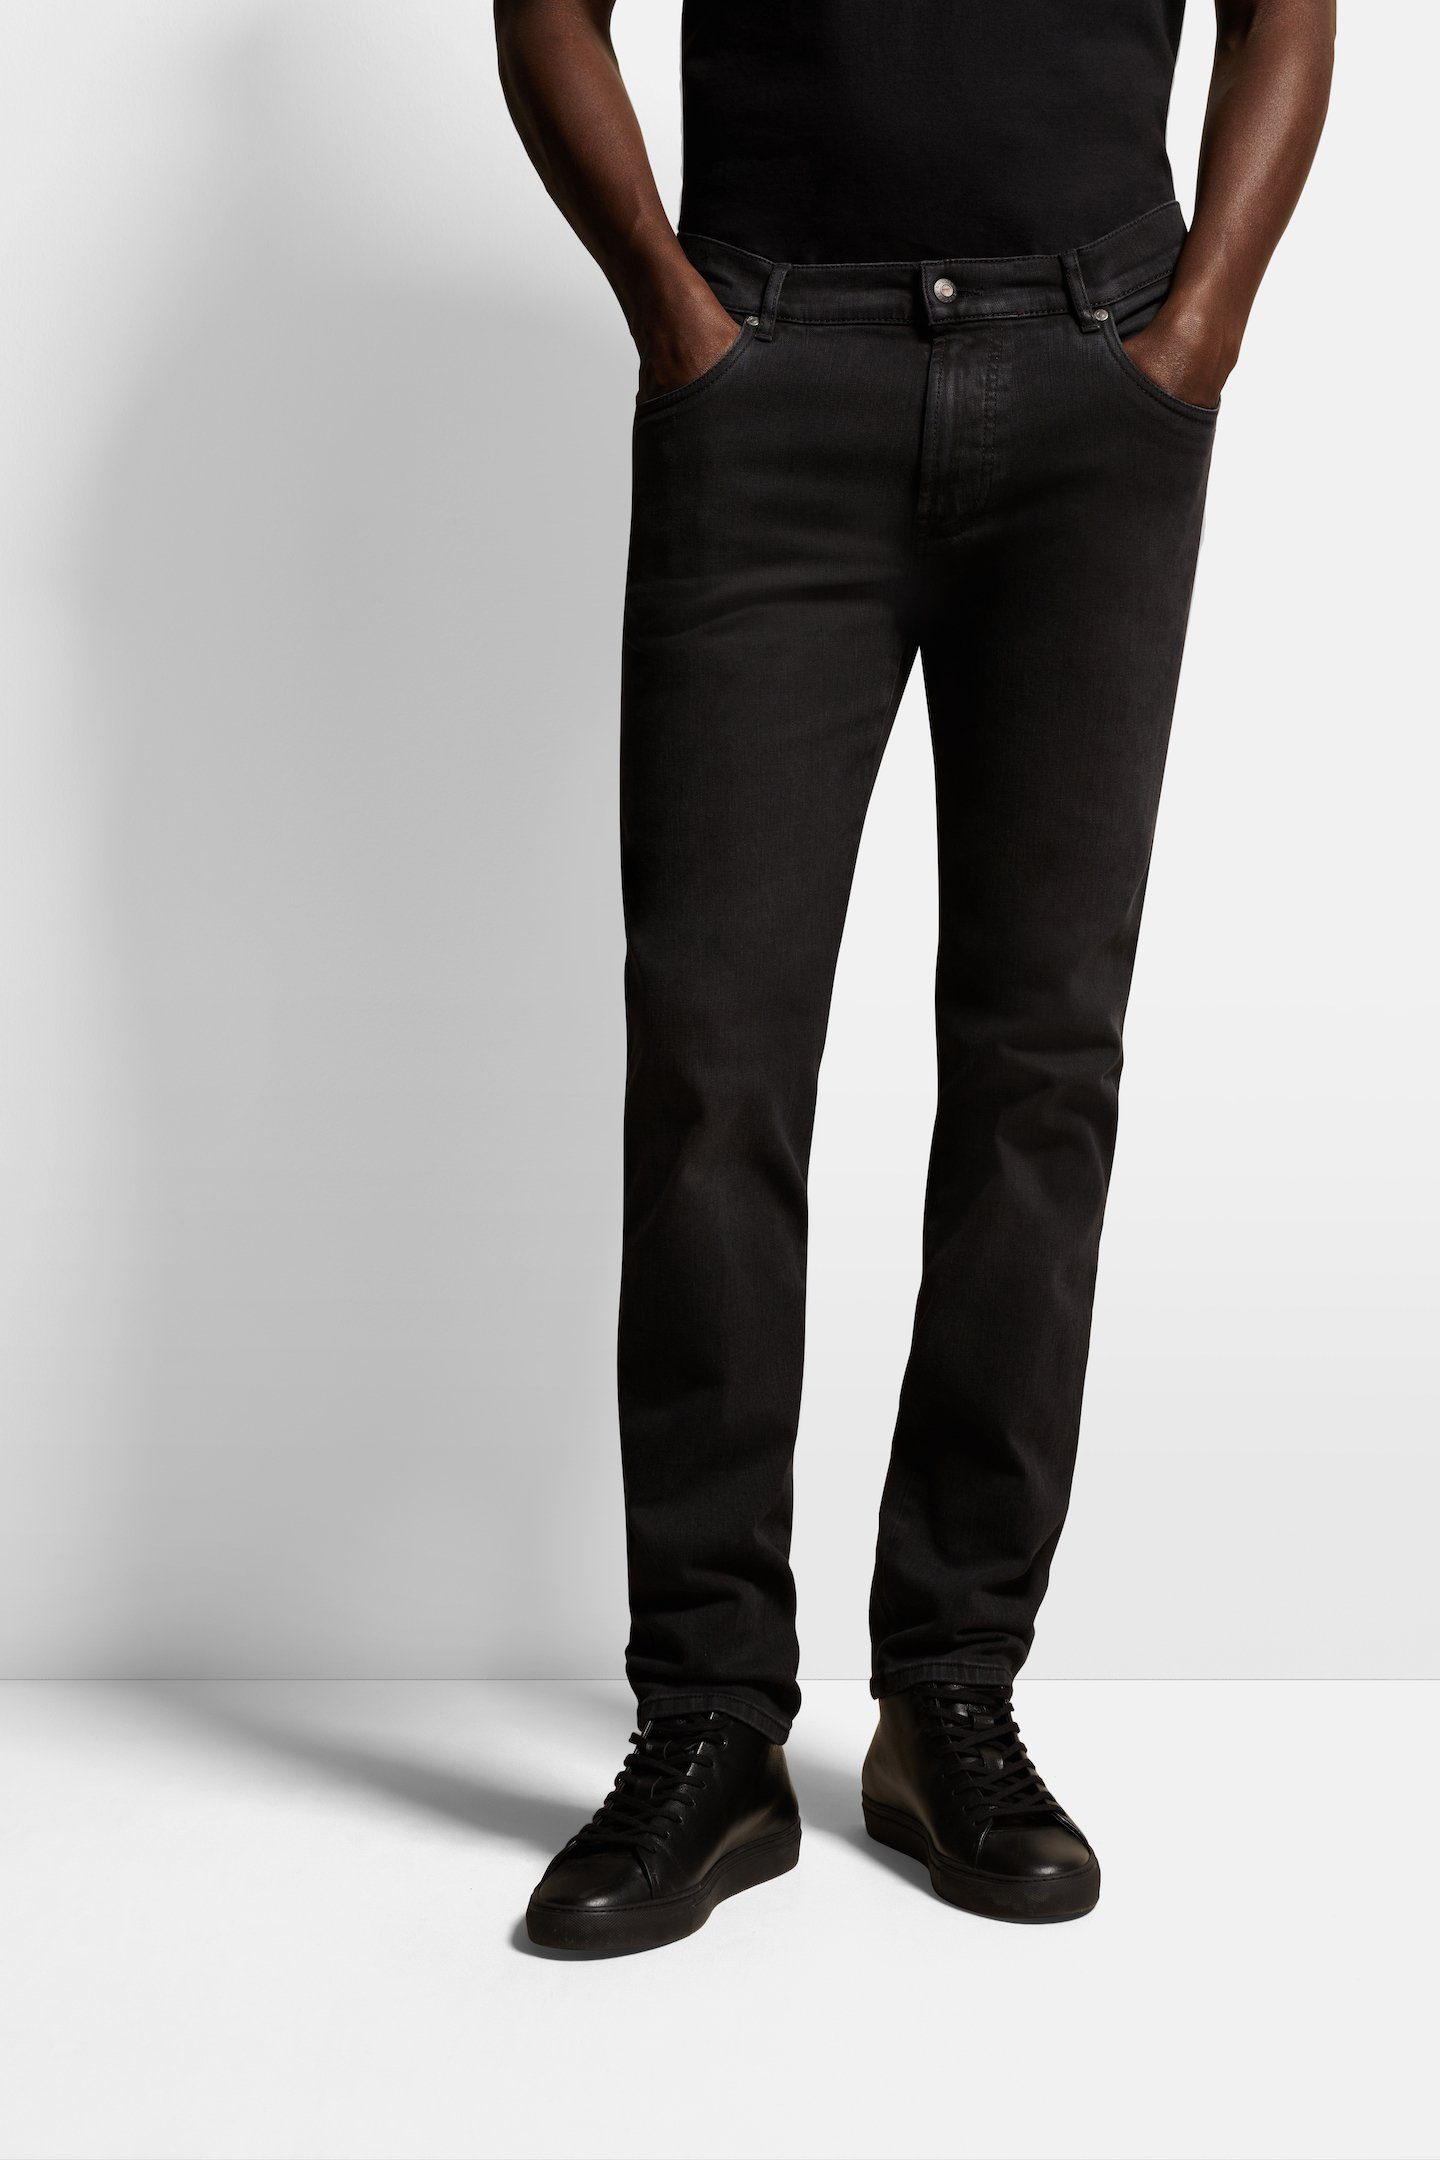 bugatti 5-Pocket-Jeans Flexcity Denim mit hohem Tragekomfort dunkelgrau